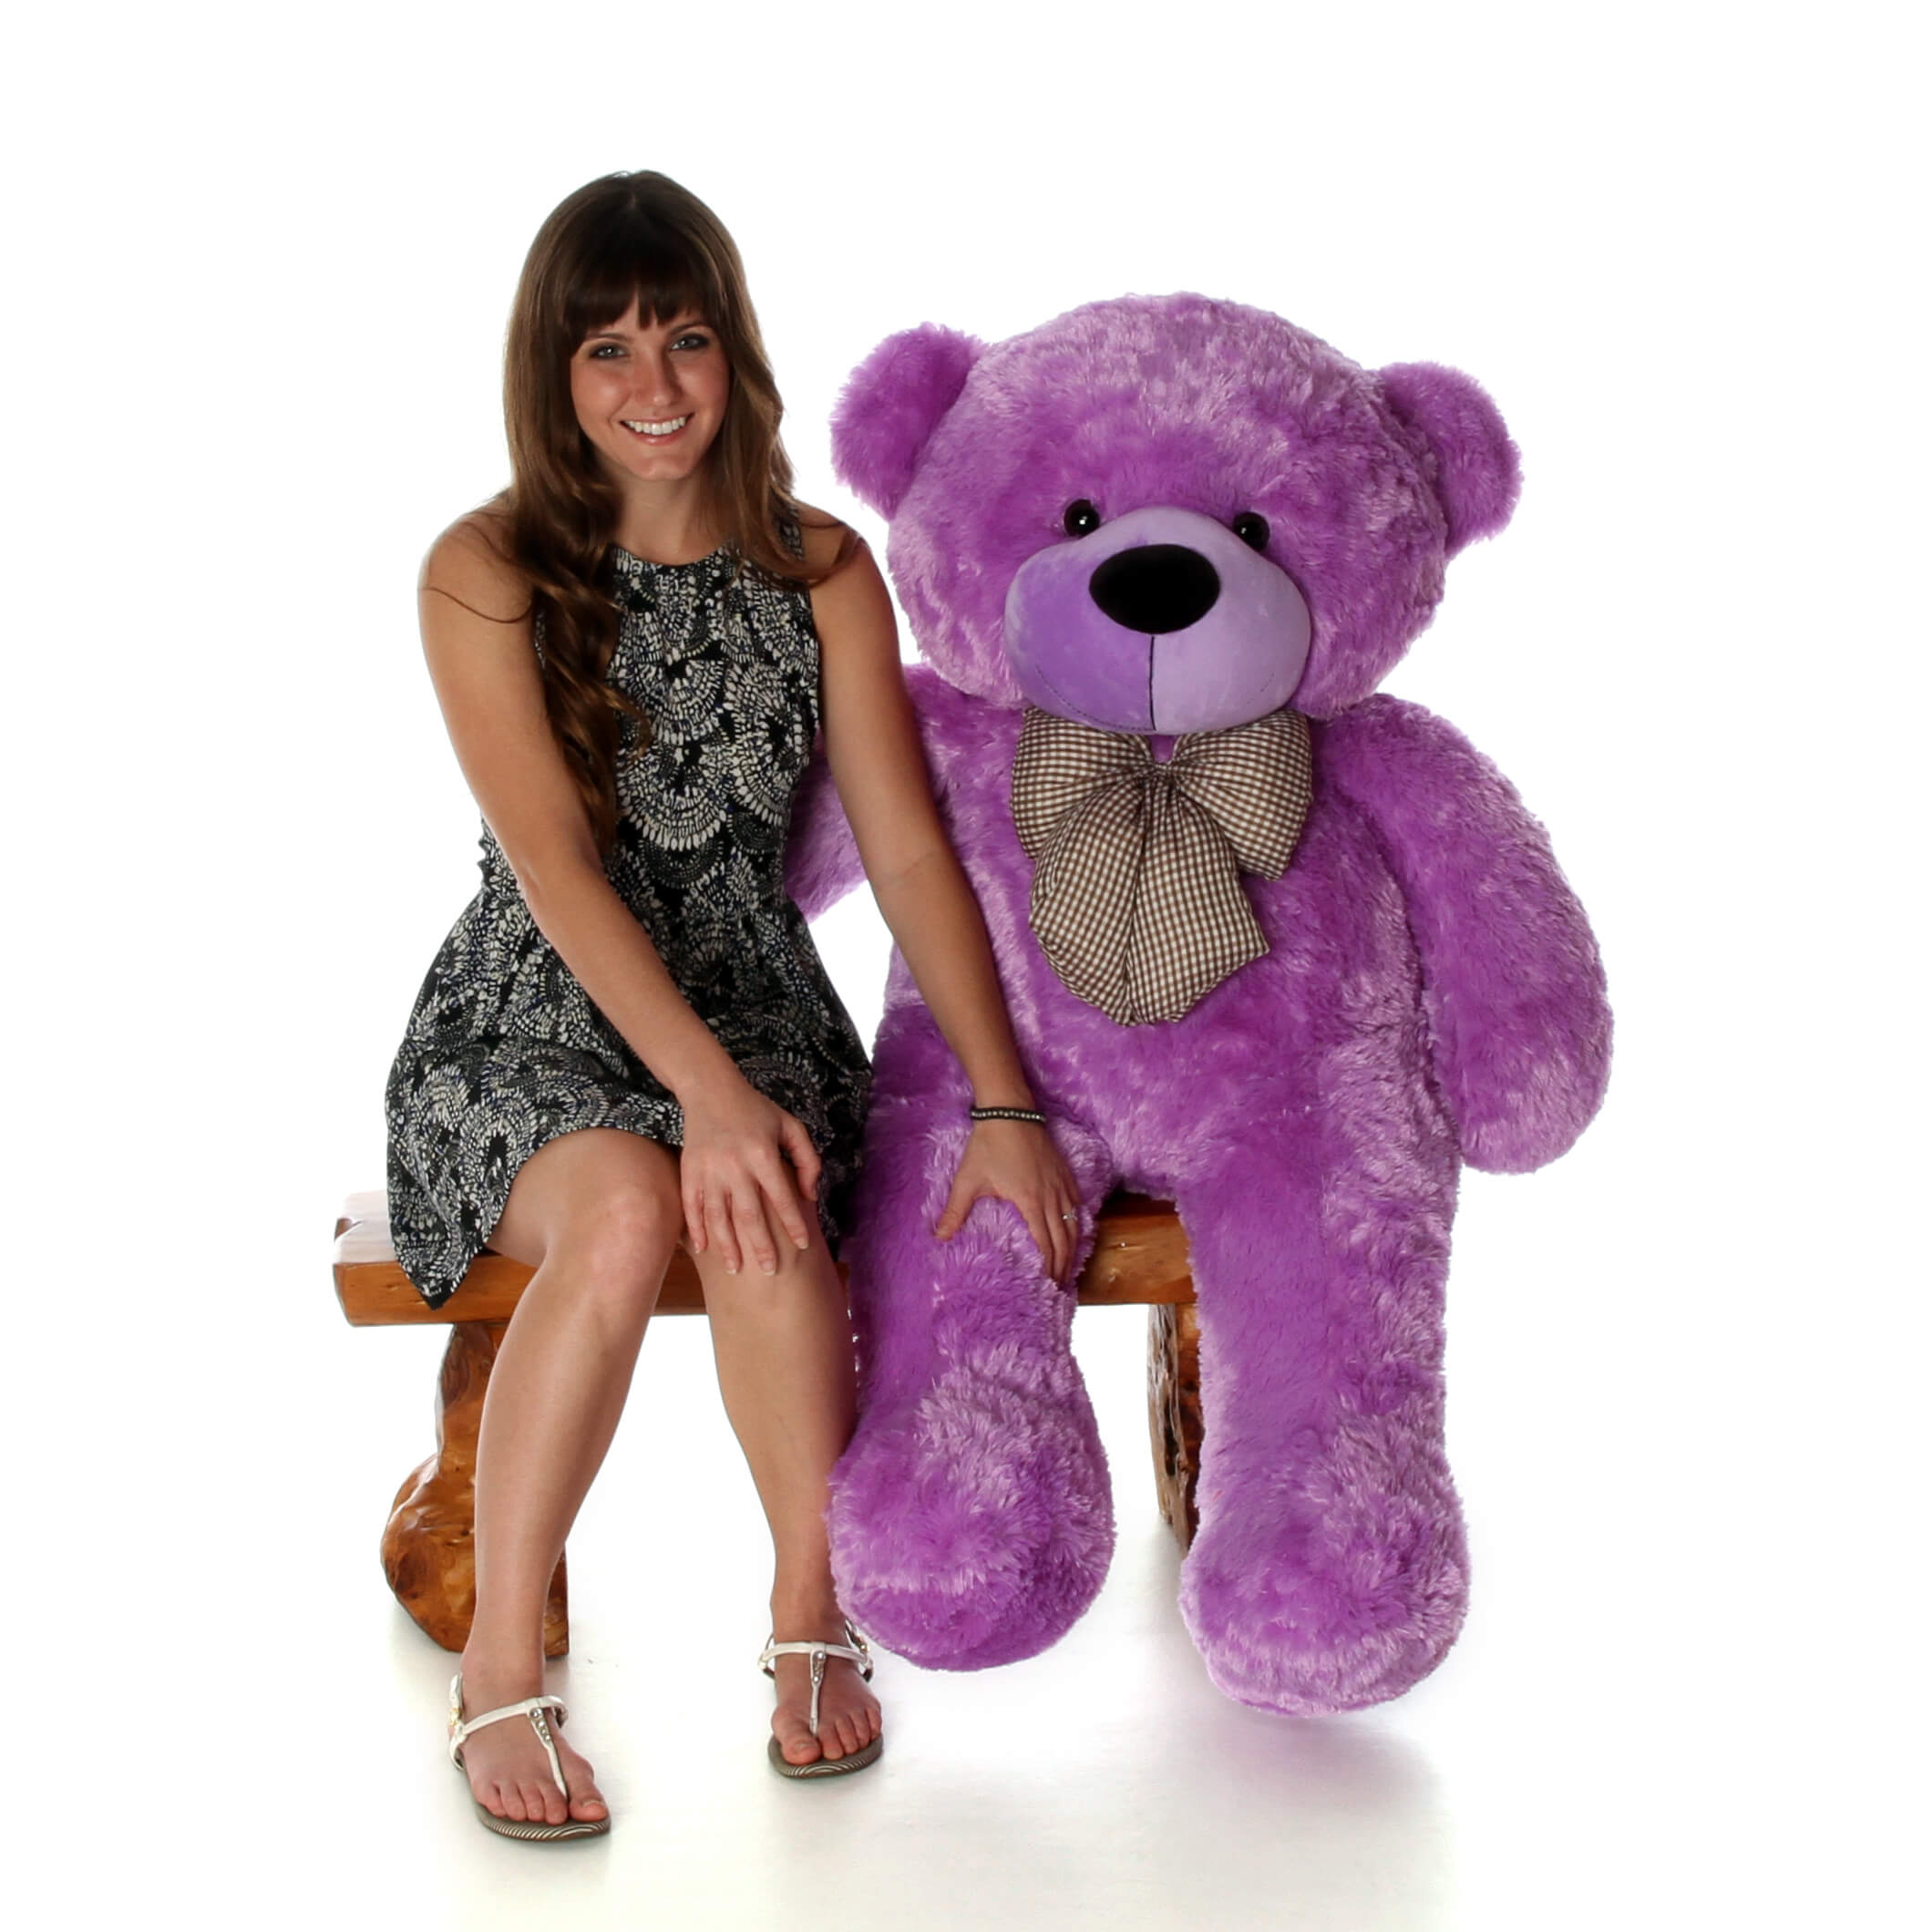 4ft-purple-life-size-teddy-bear-gift-of-a-lifetime-deedee-cuddles-1.jpg